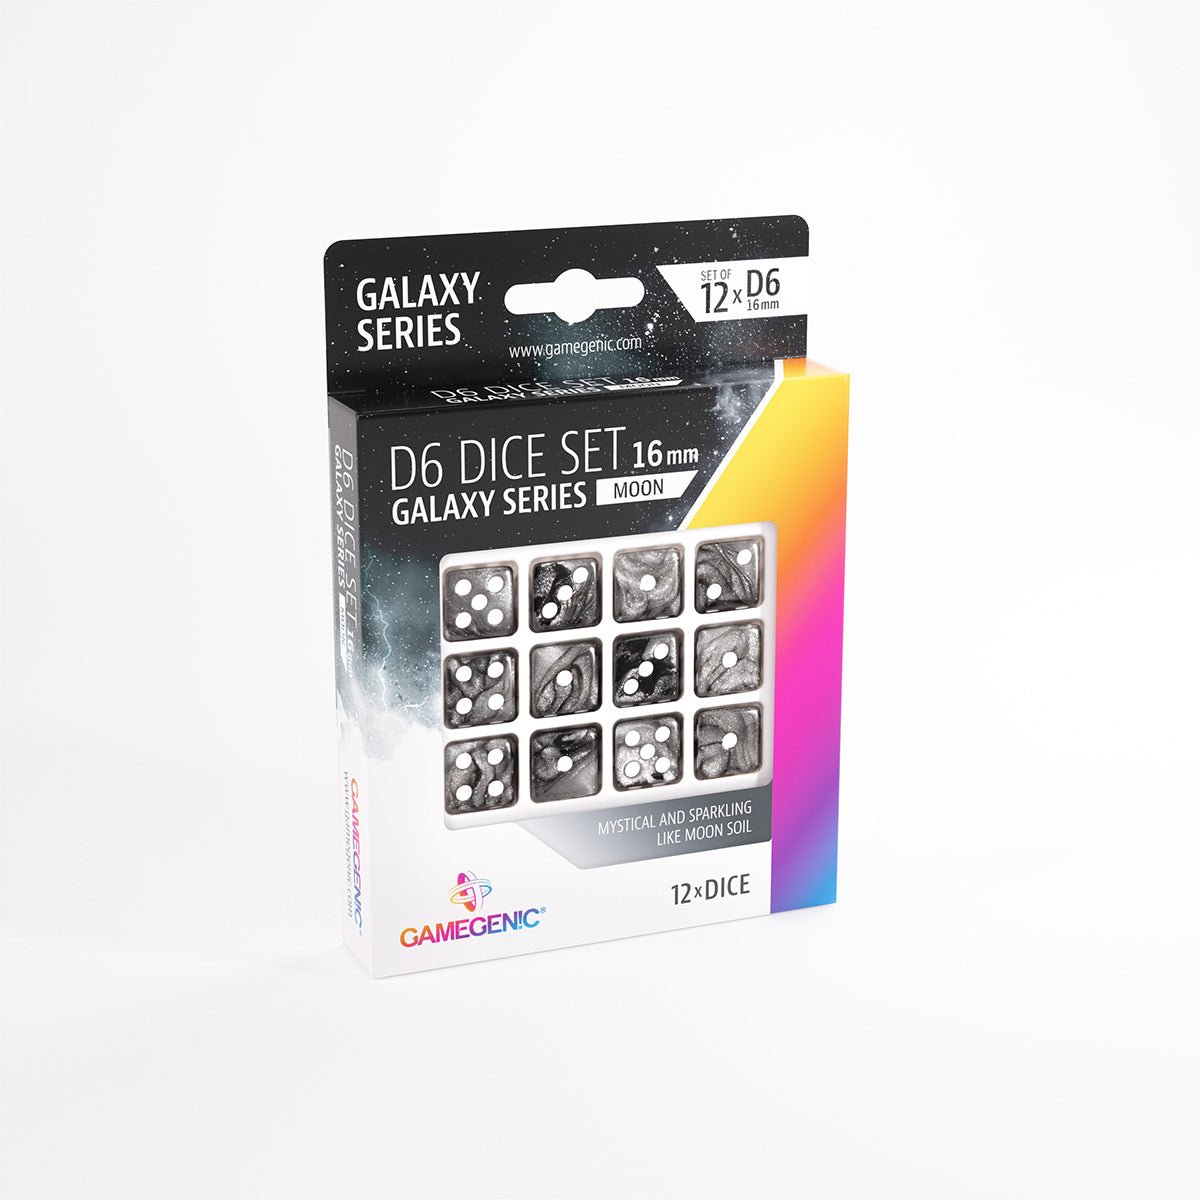 Gamegenic - Galaxy Series D6 Dice Set 16 mm (12 pcs)